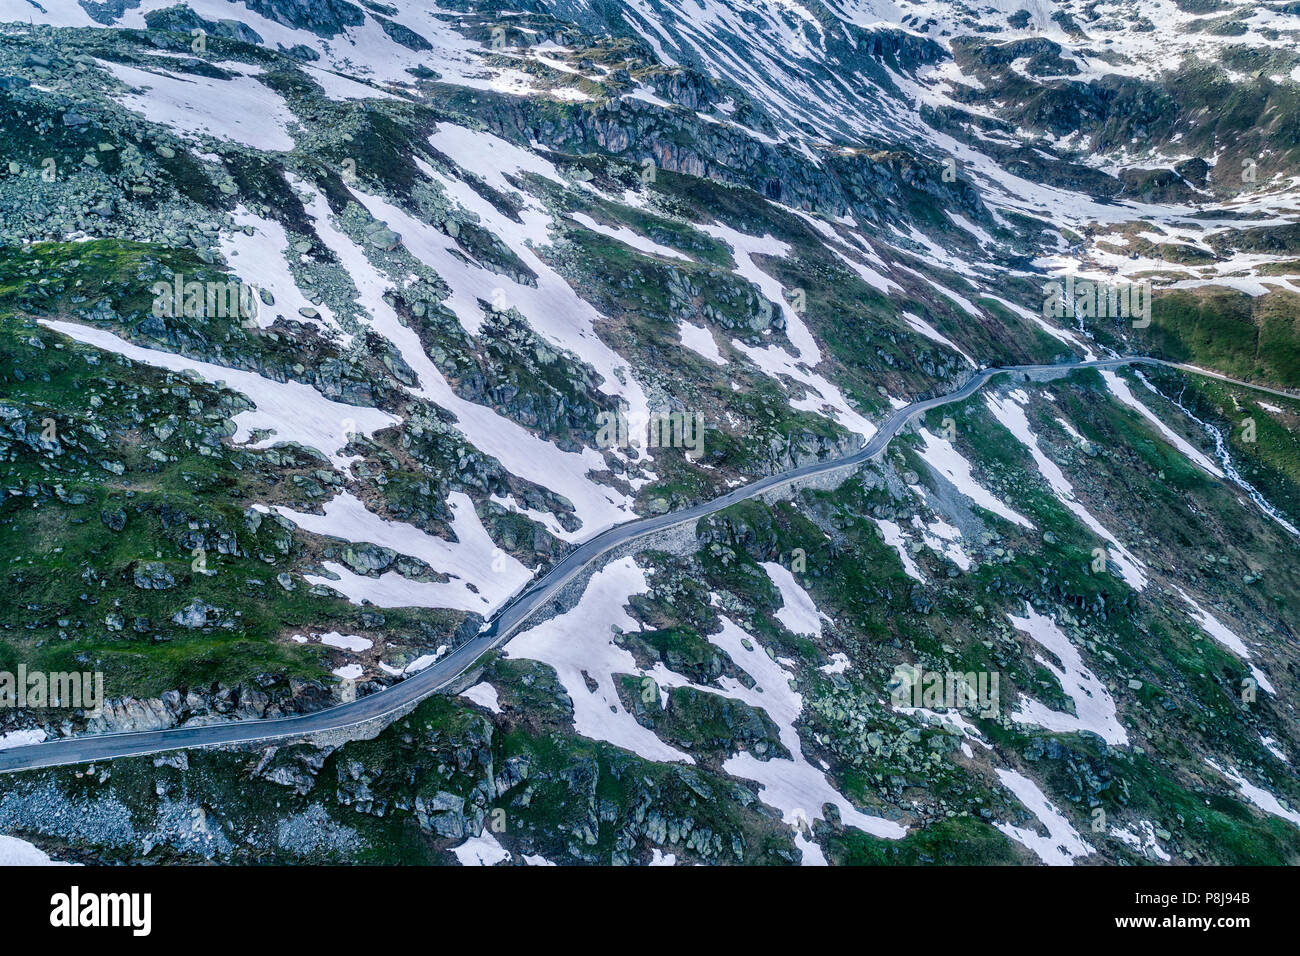 Aerial view of the Furkapass mountain pass road, Urserental, Canton Uri, Switzerland Stock Photo